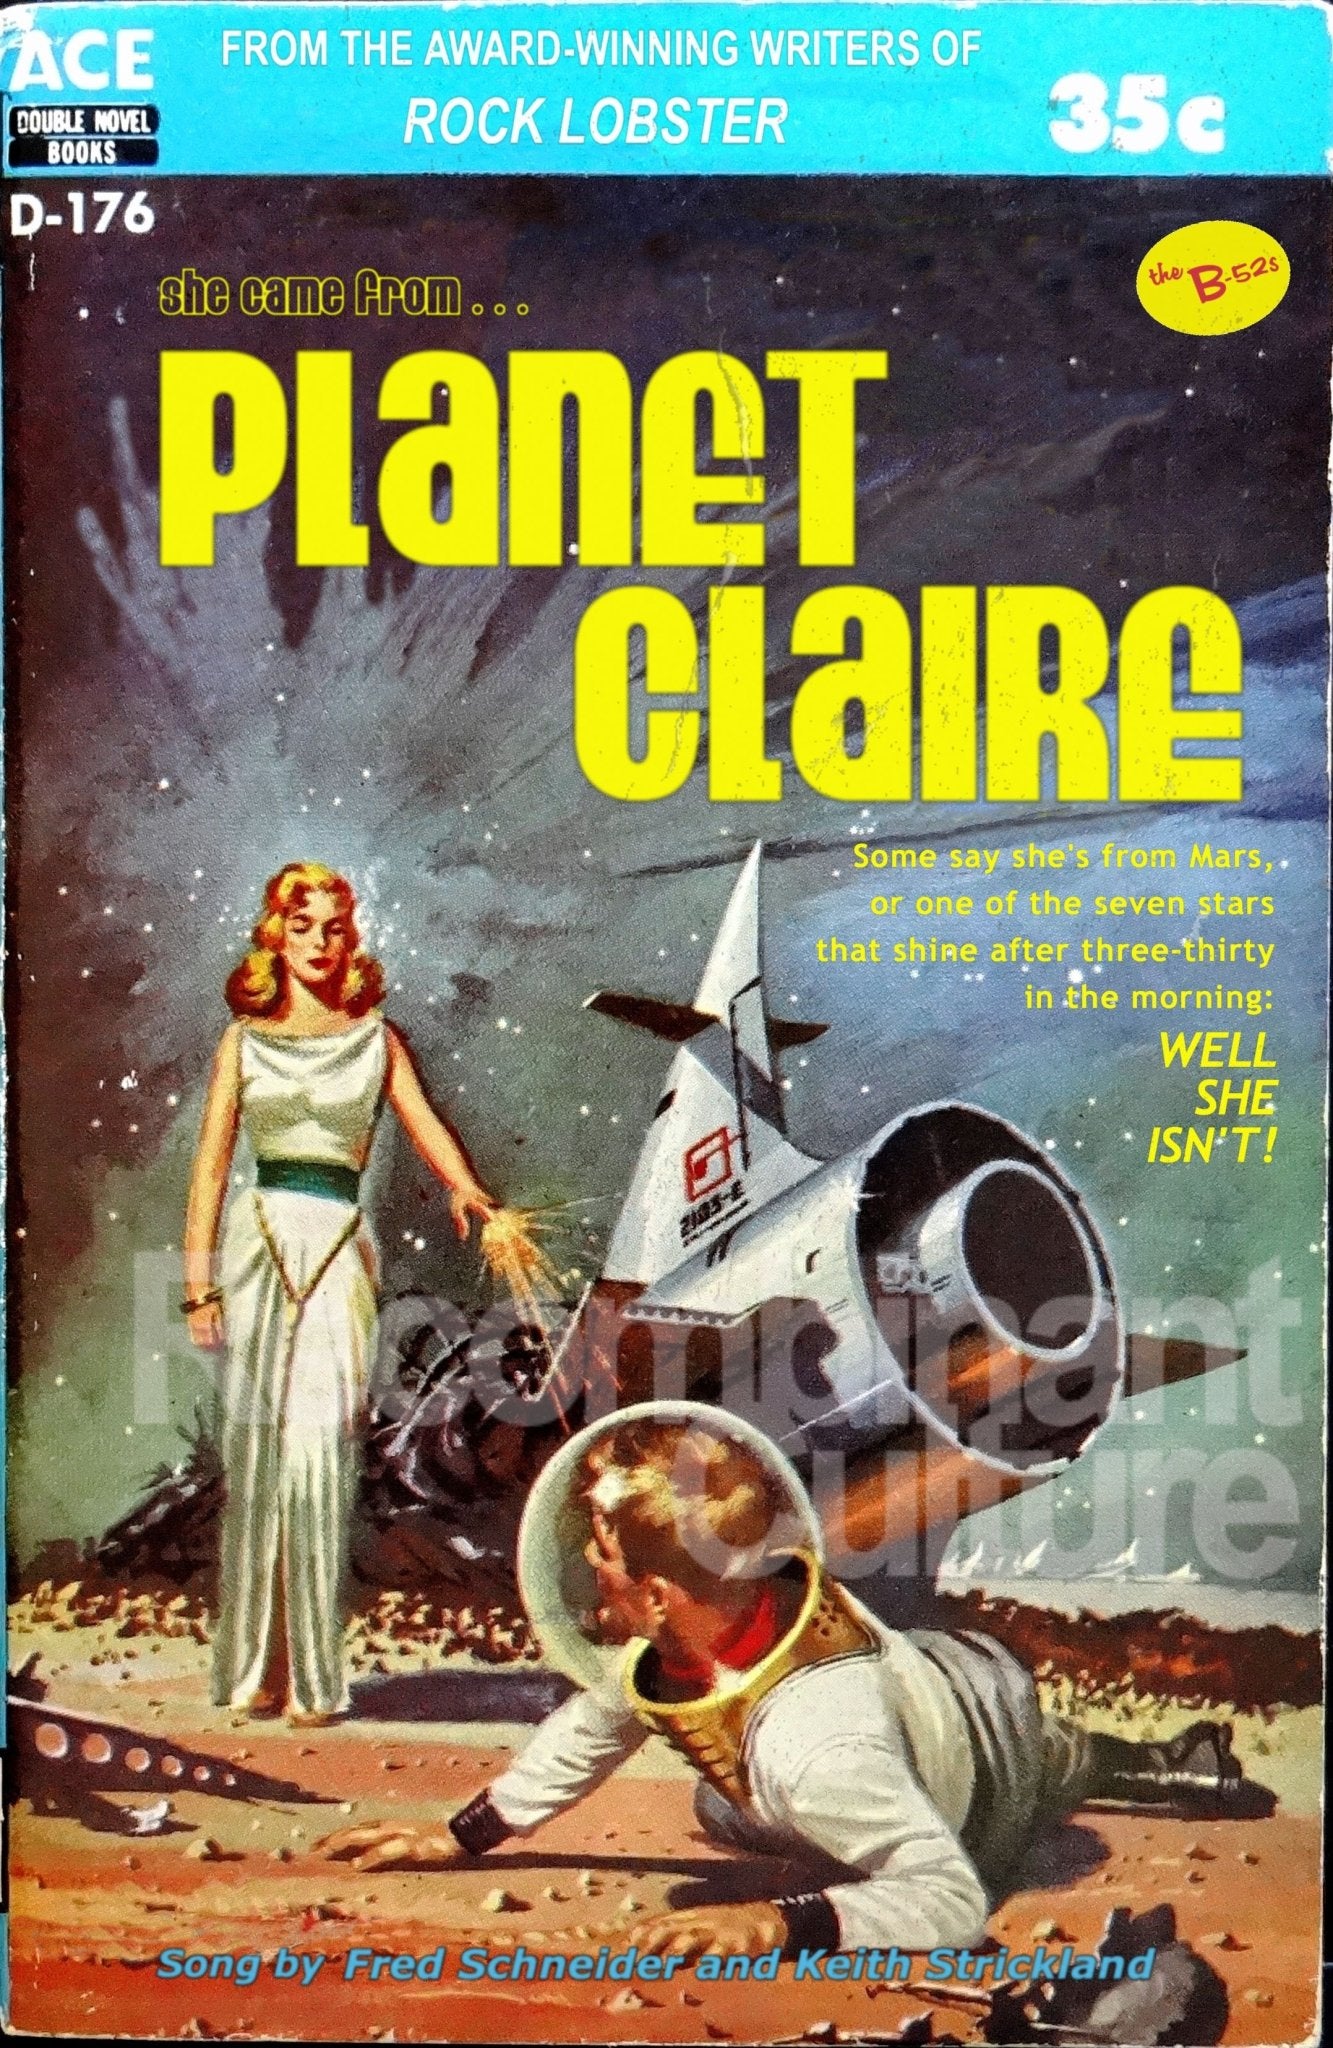 B-52s 'Planet Claire' Art Print - RecombinantCulture